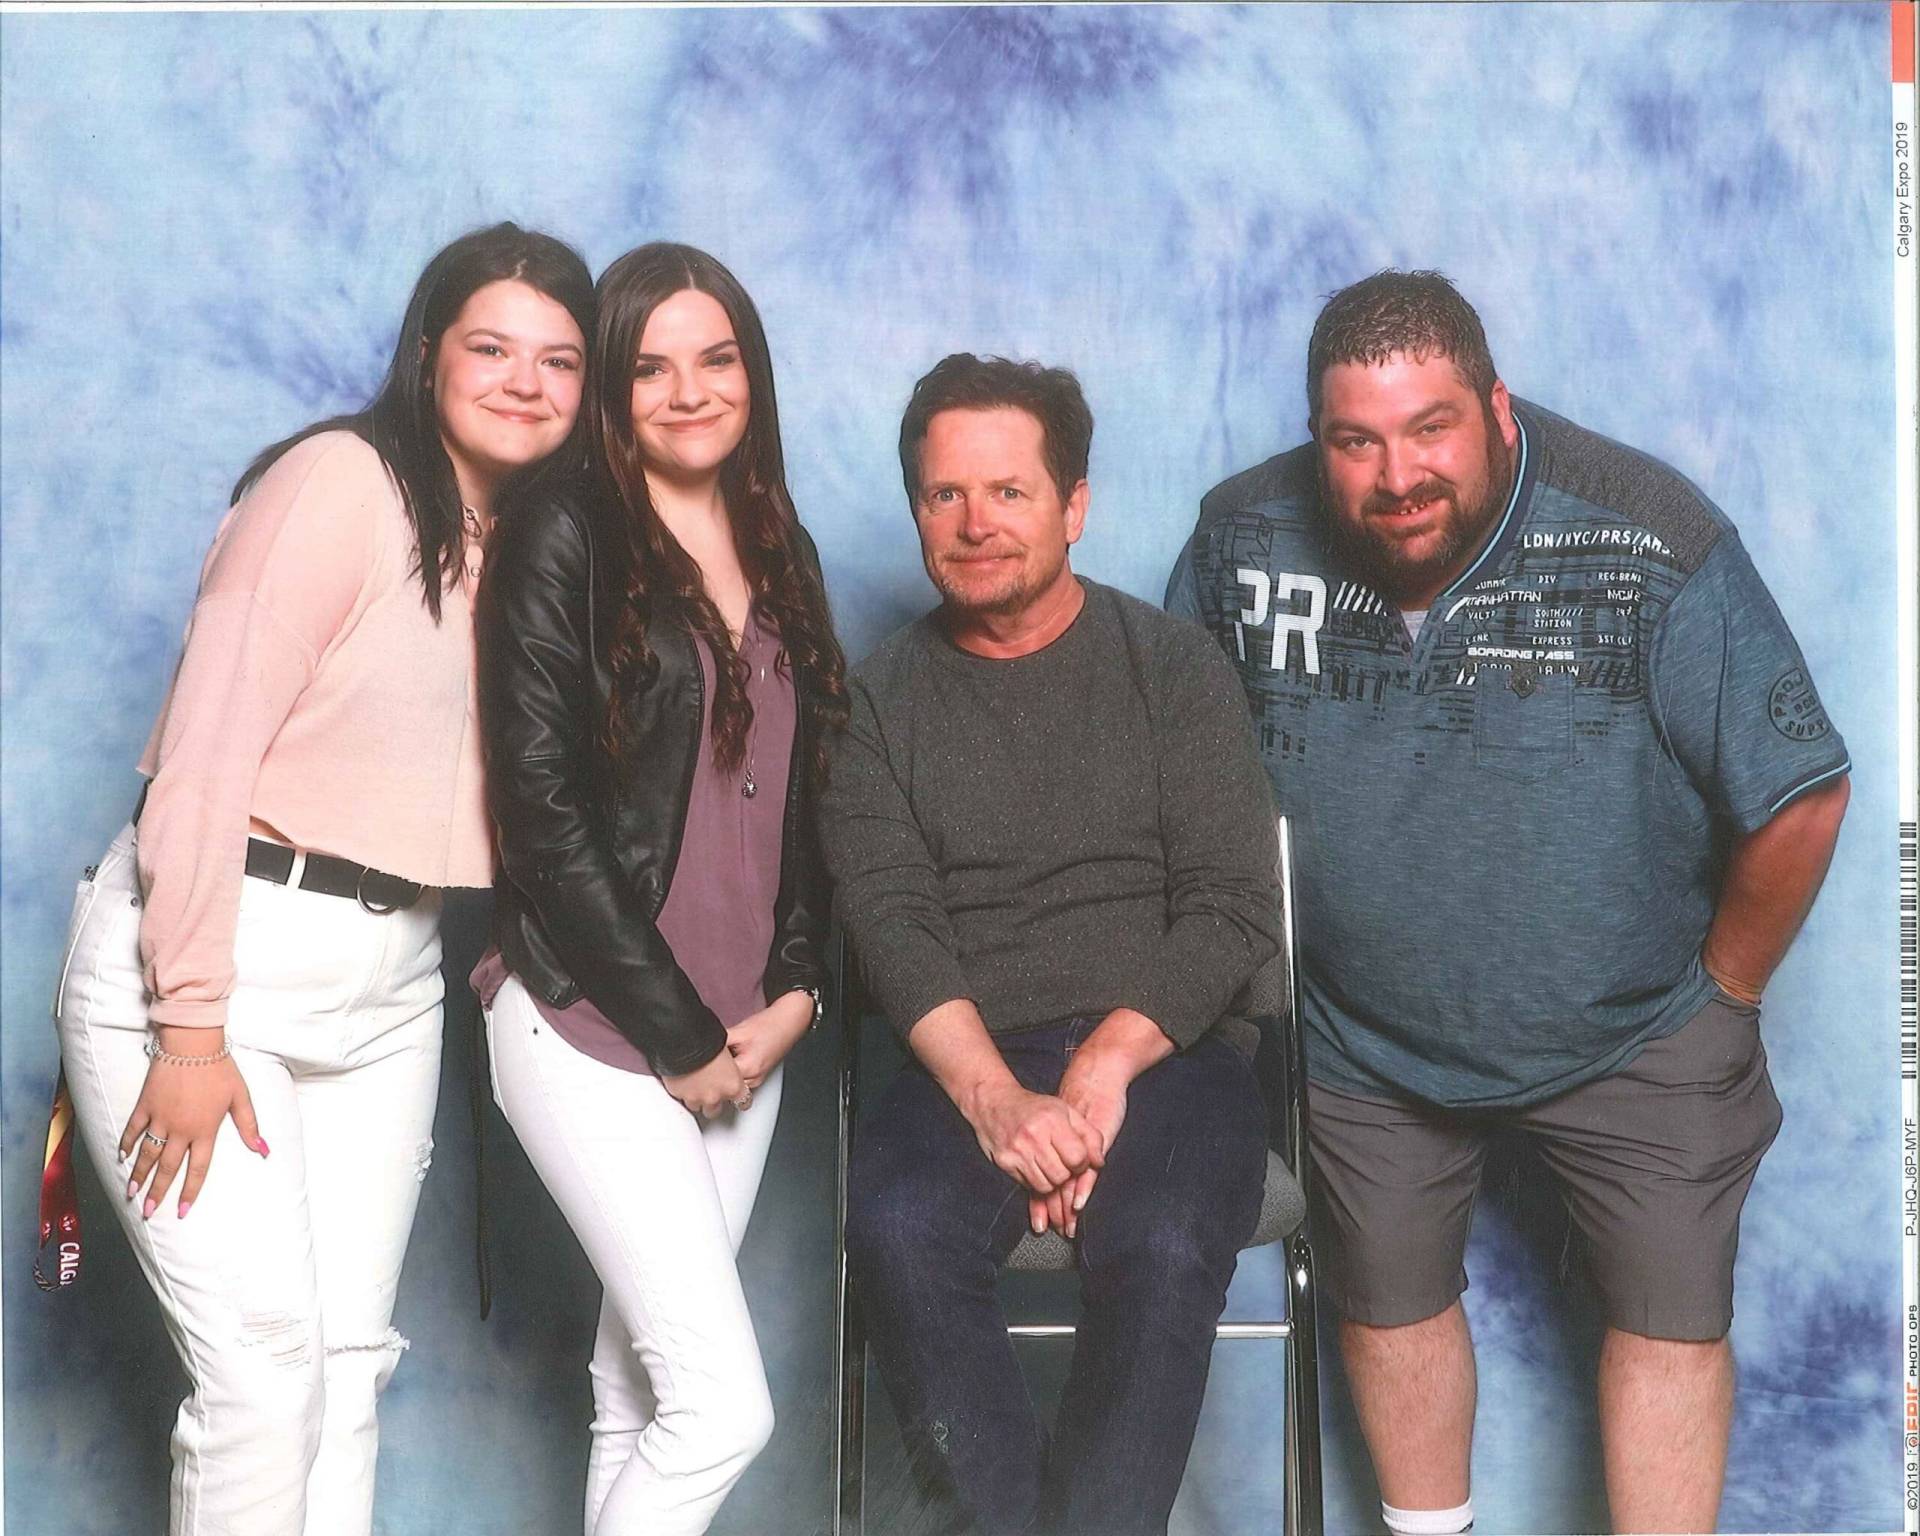 Jason with Michael J Fox 2 girls